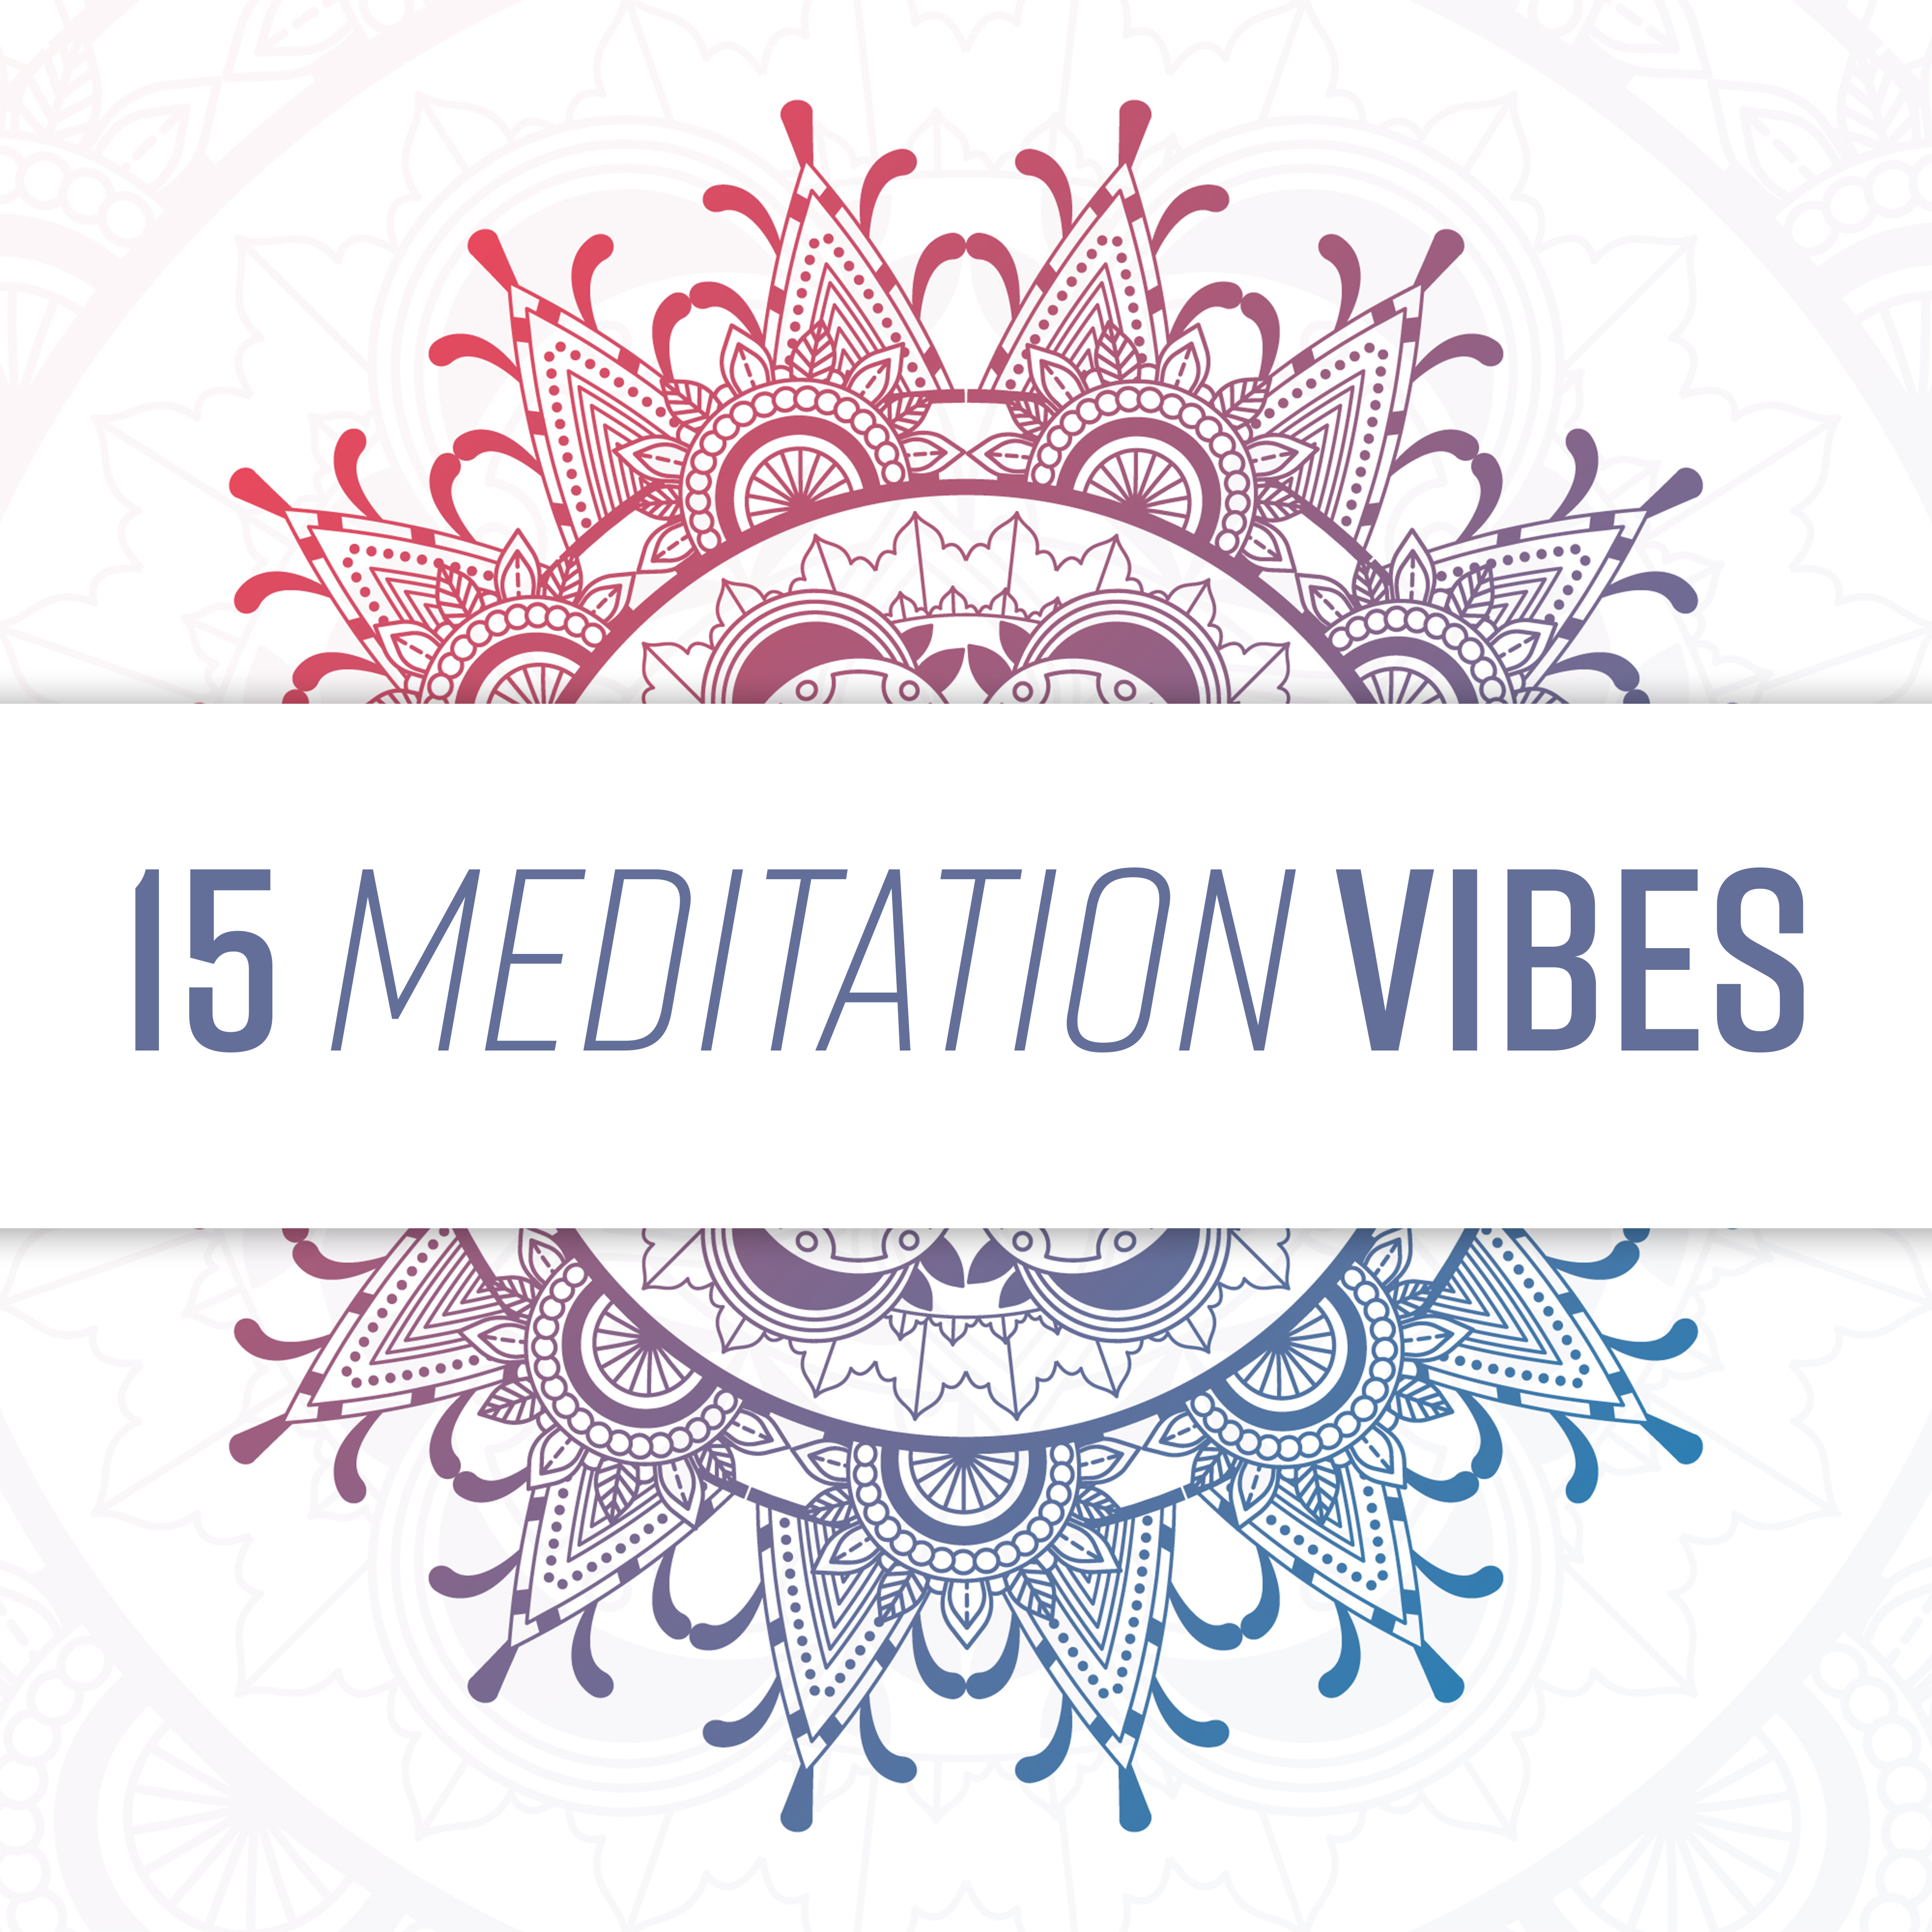 15 Meditation Vibes